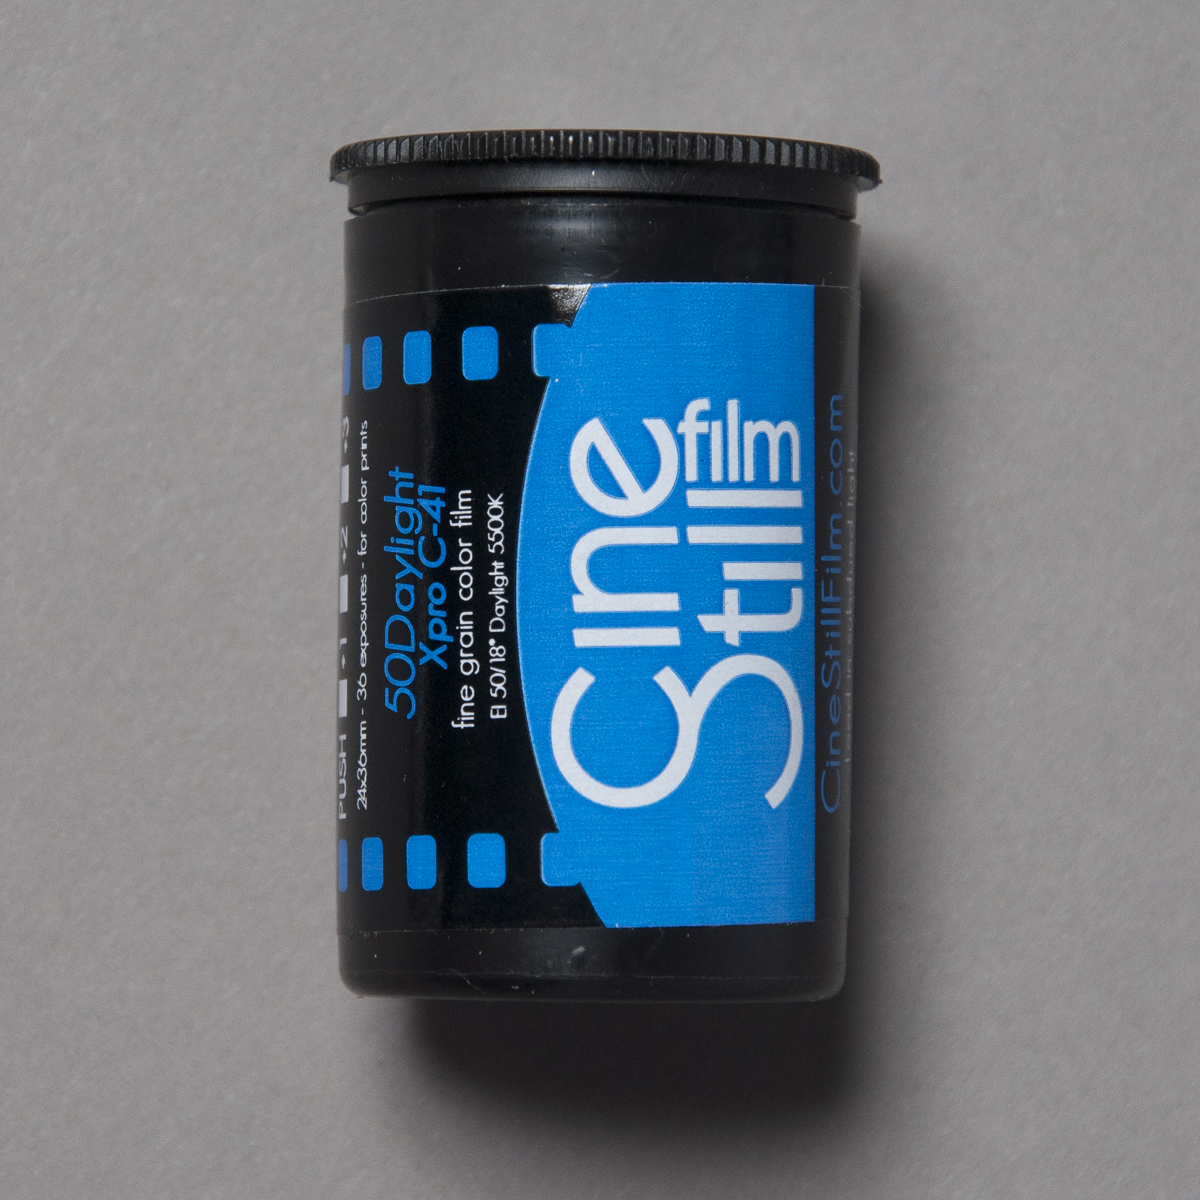 Cinestill 50D Colour Film